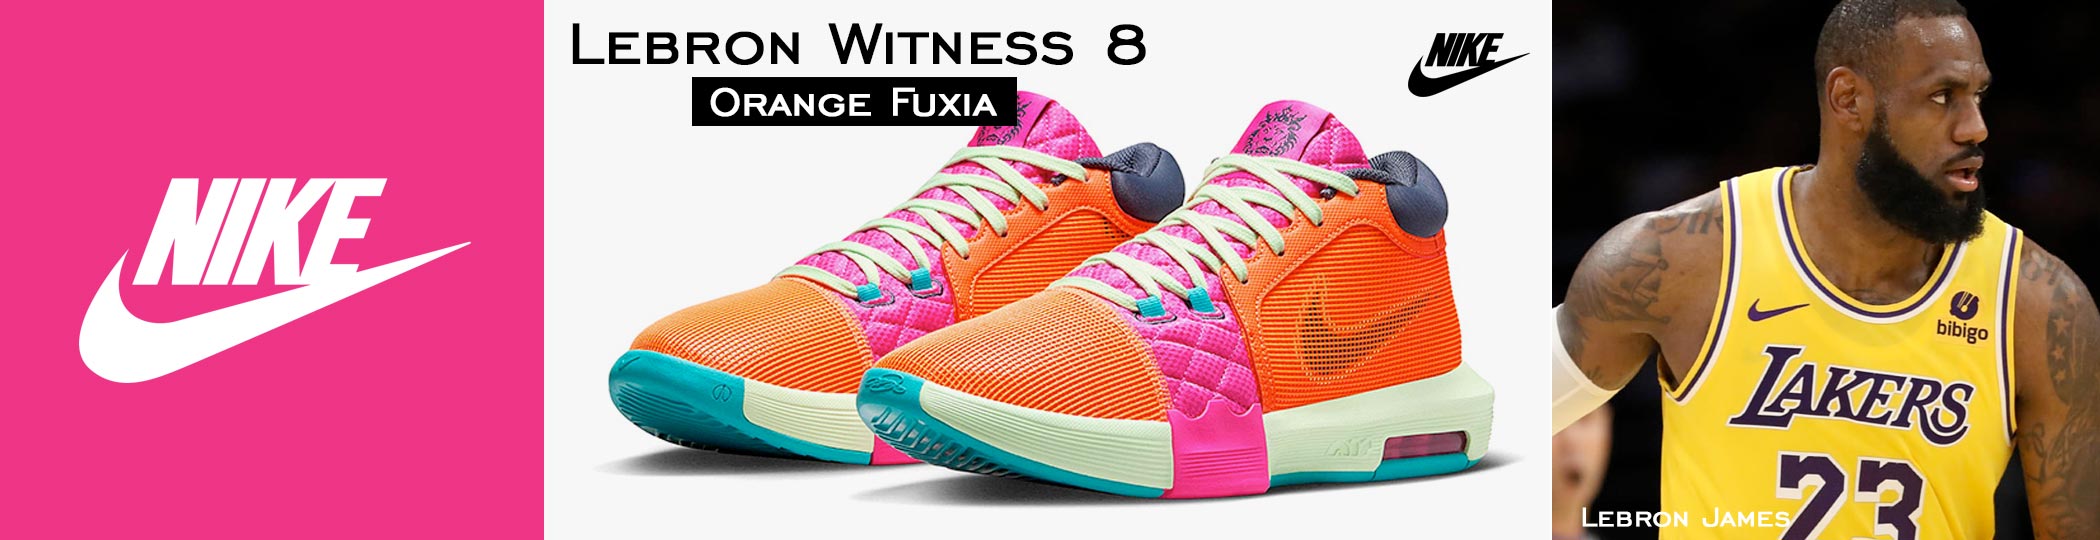 LeBron Witness 8 - Orange Fuxia